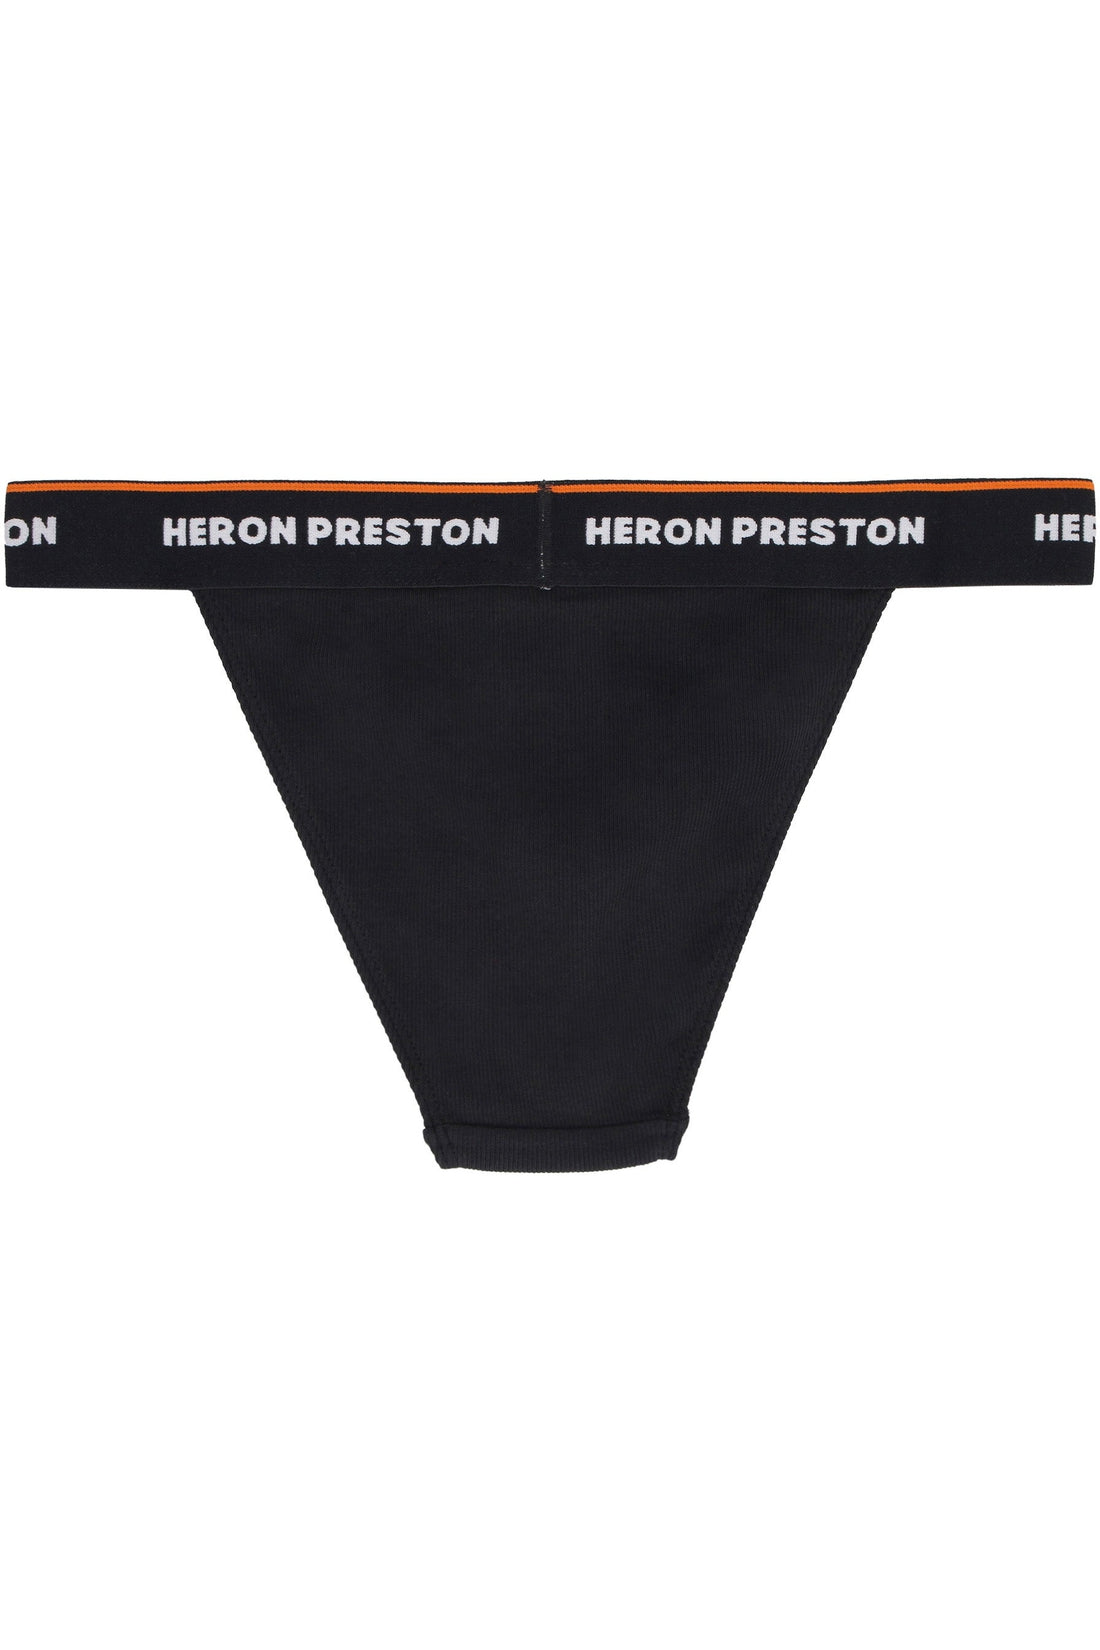 Heron Preston-OUTLET-SALE-Logoed elastic band cotton briefs-ARCHIVIST